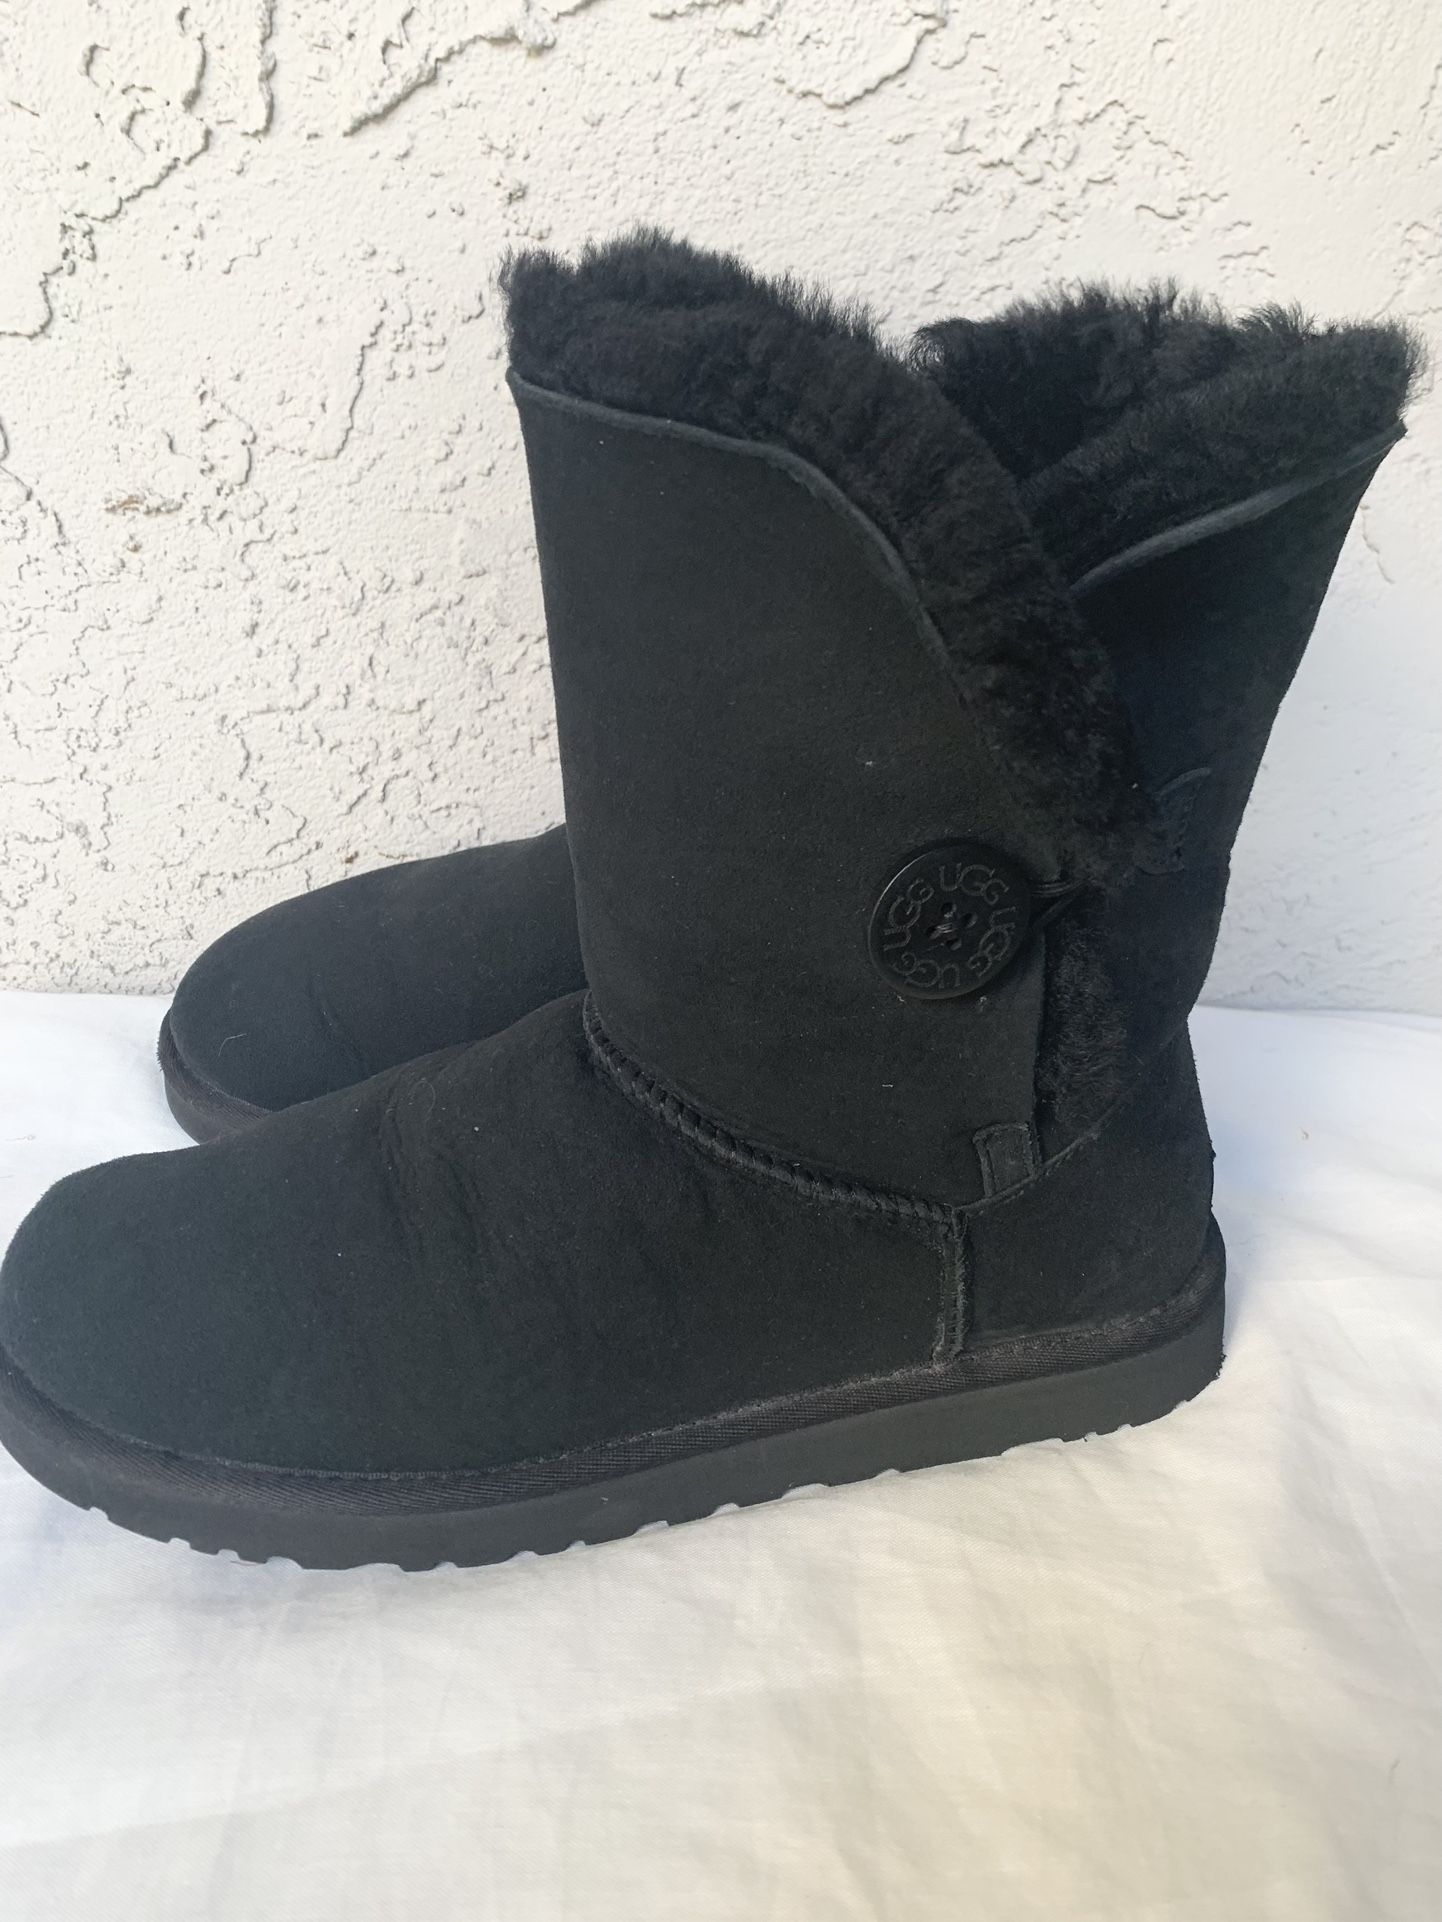 UGG Black Boots Size 10